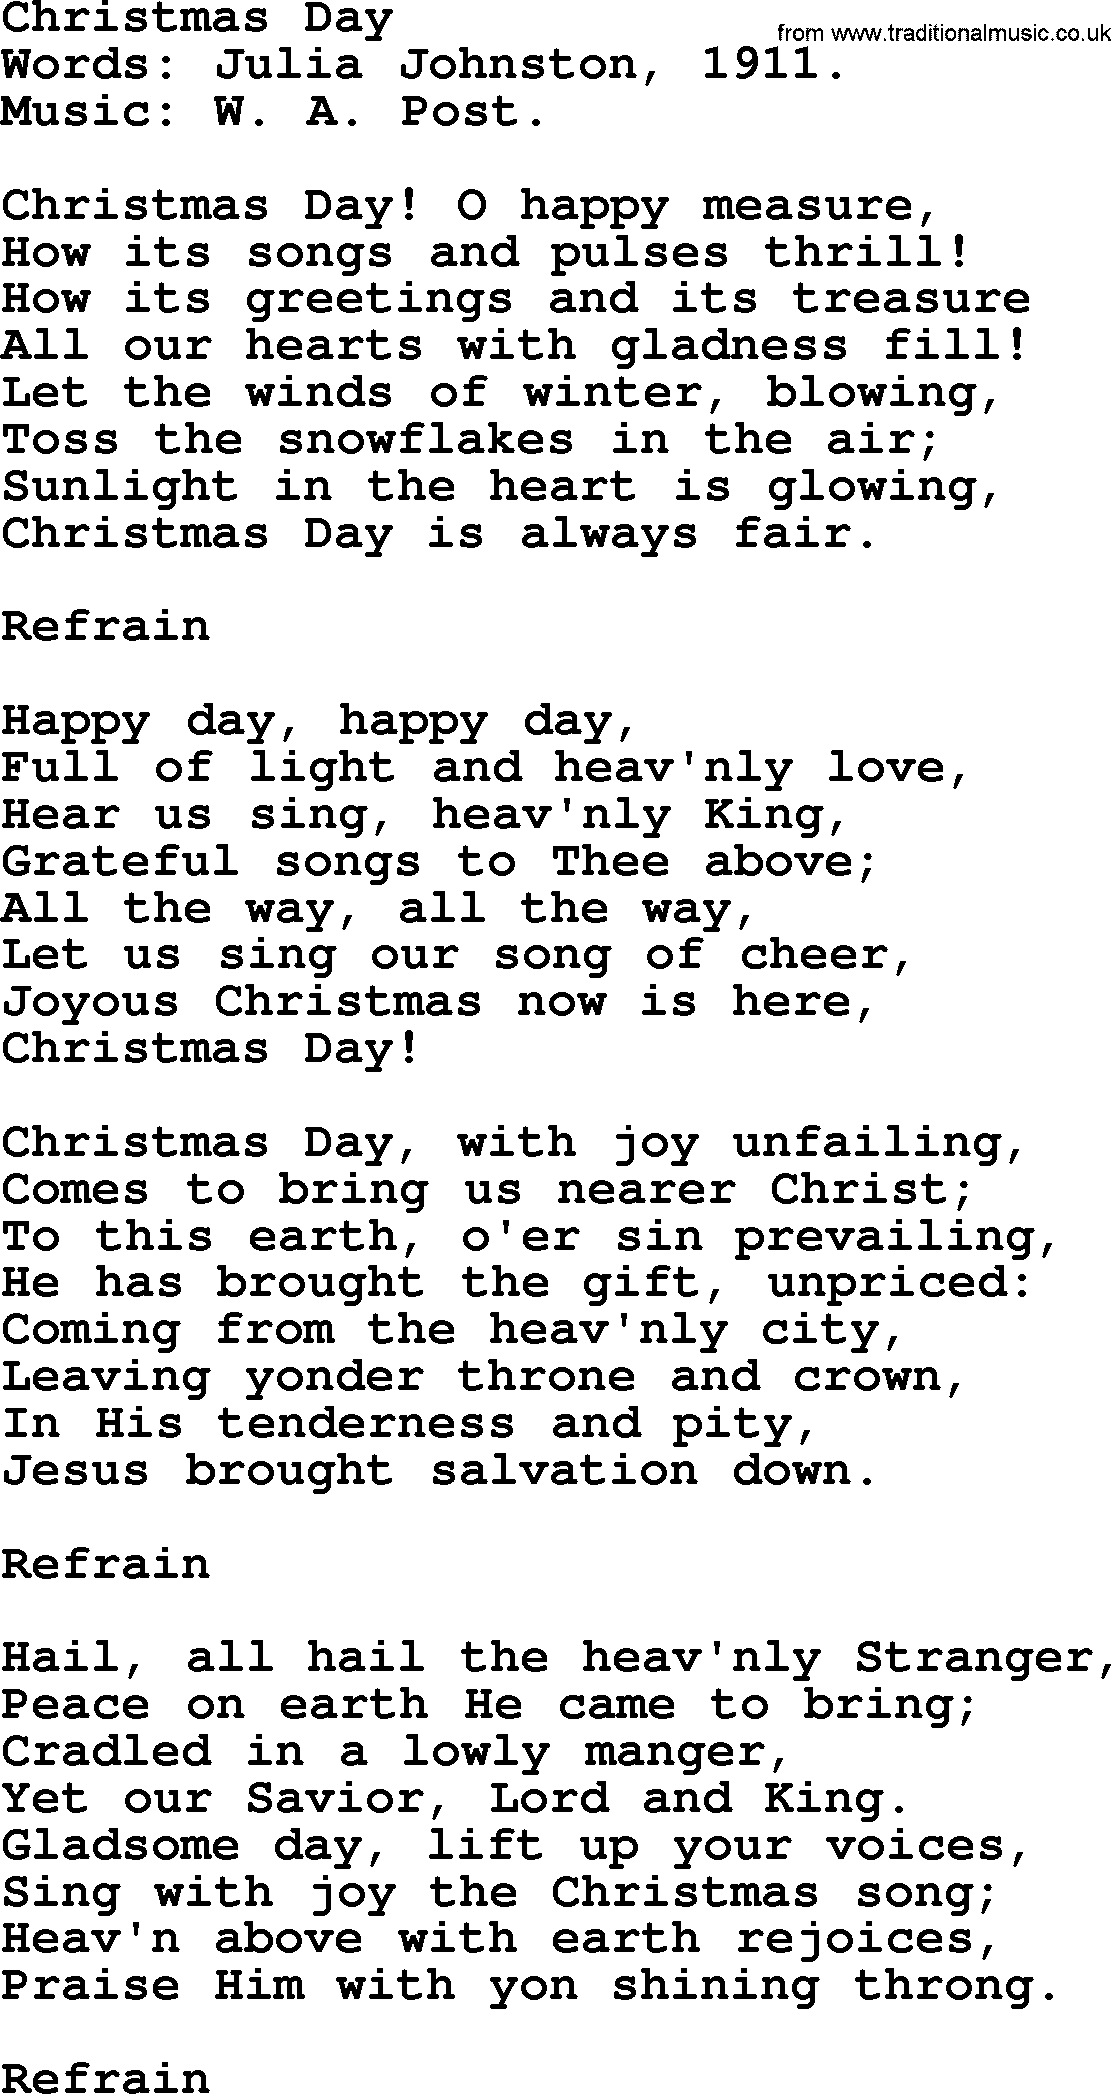 Christmas Hymns, Carols and Songs, title: Christmas Day, lyrics with PDF